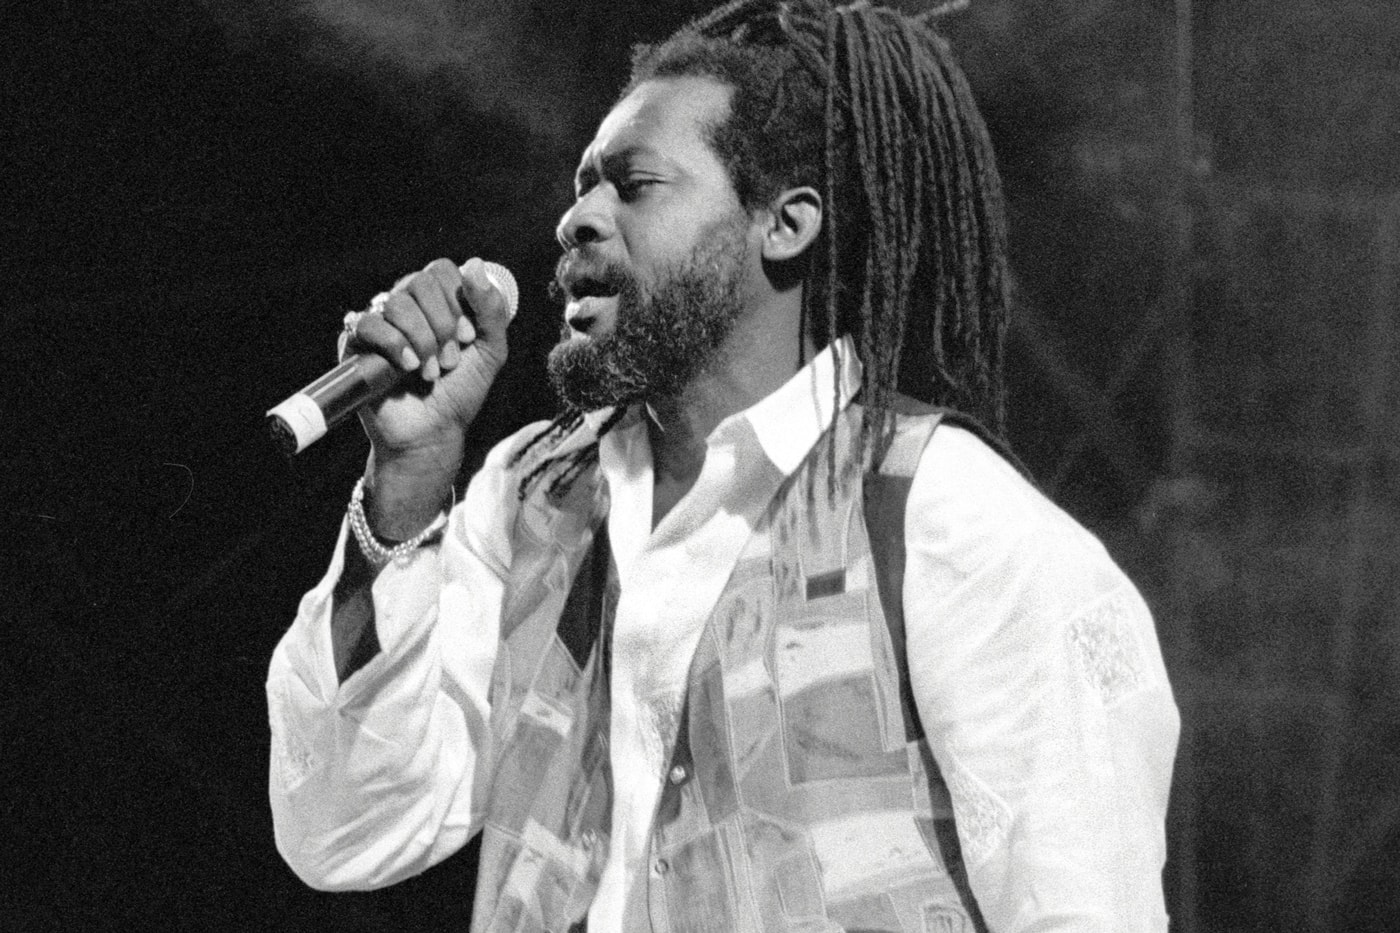 jamaican-singer-jimmy-riley-has-passed-away